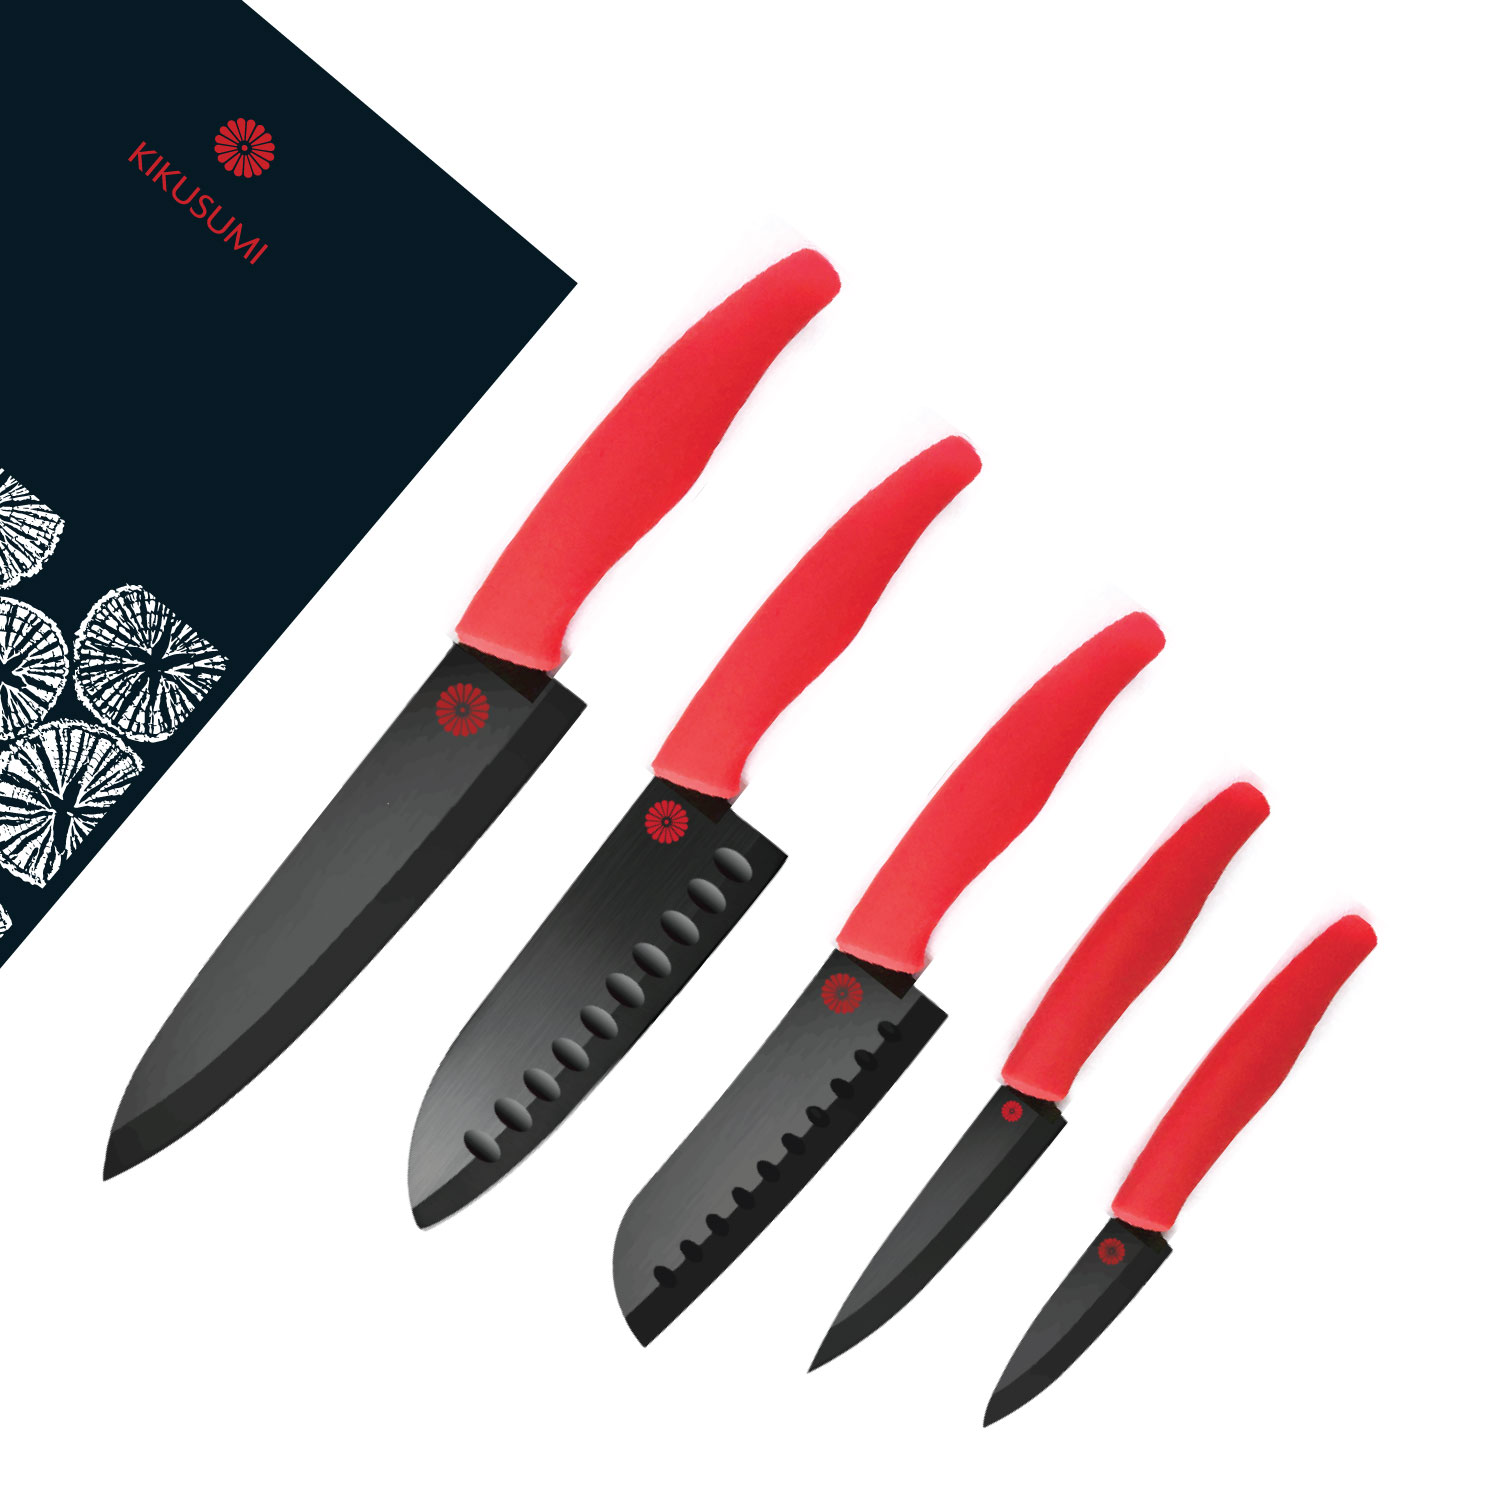 Kikusumi Black Ceramic Collection 6 Piece Chef Knife Gift Set